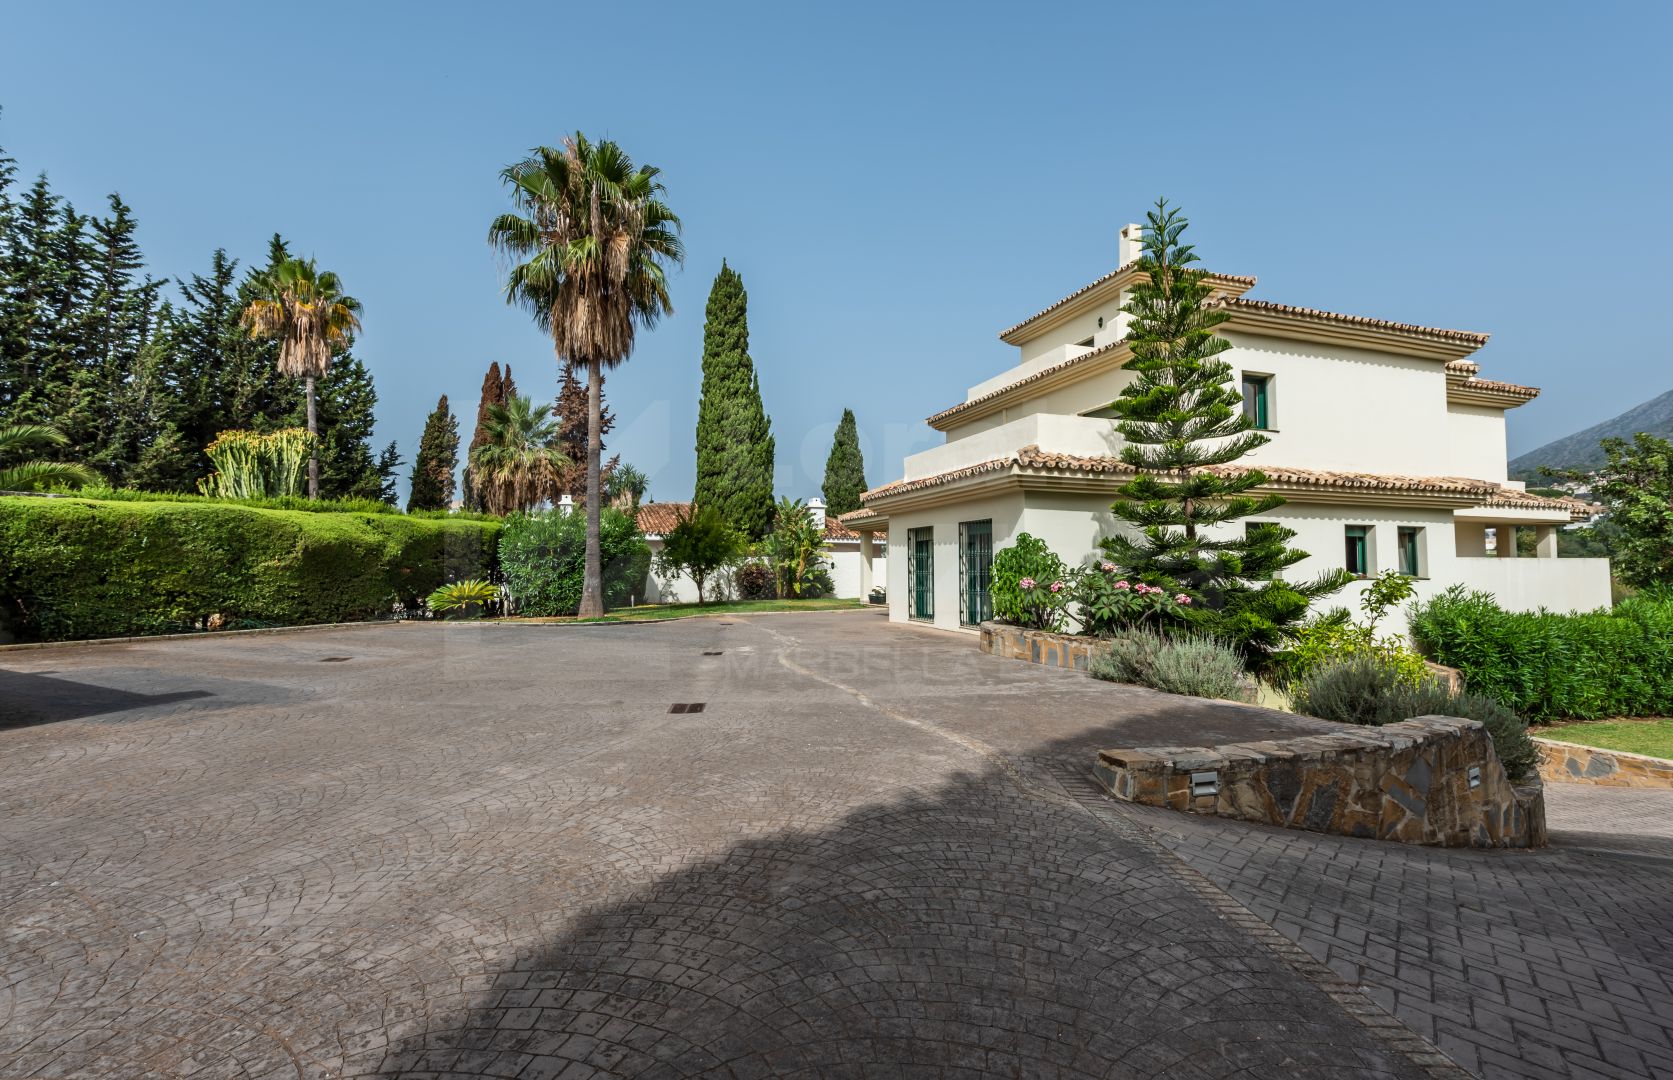 Magnificent 6-bedroom villa very close to the center of Marbella